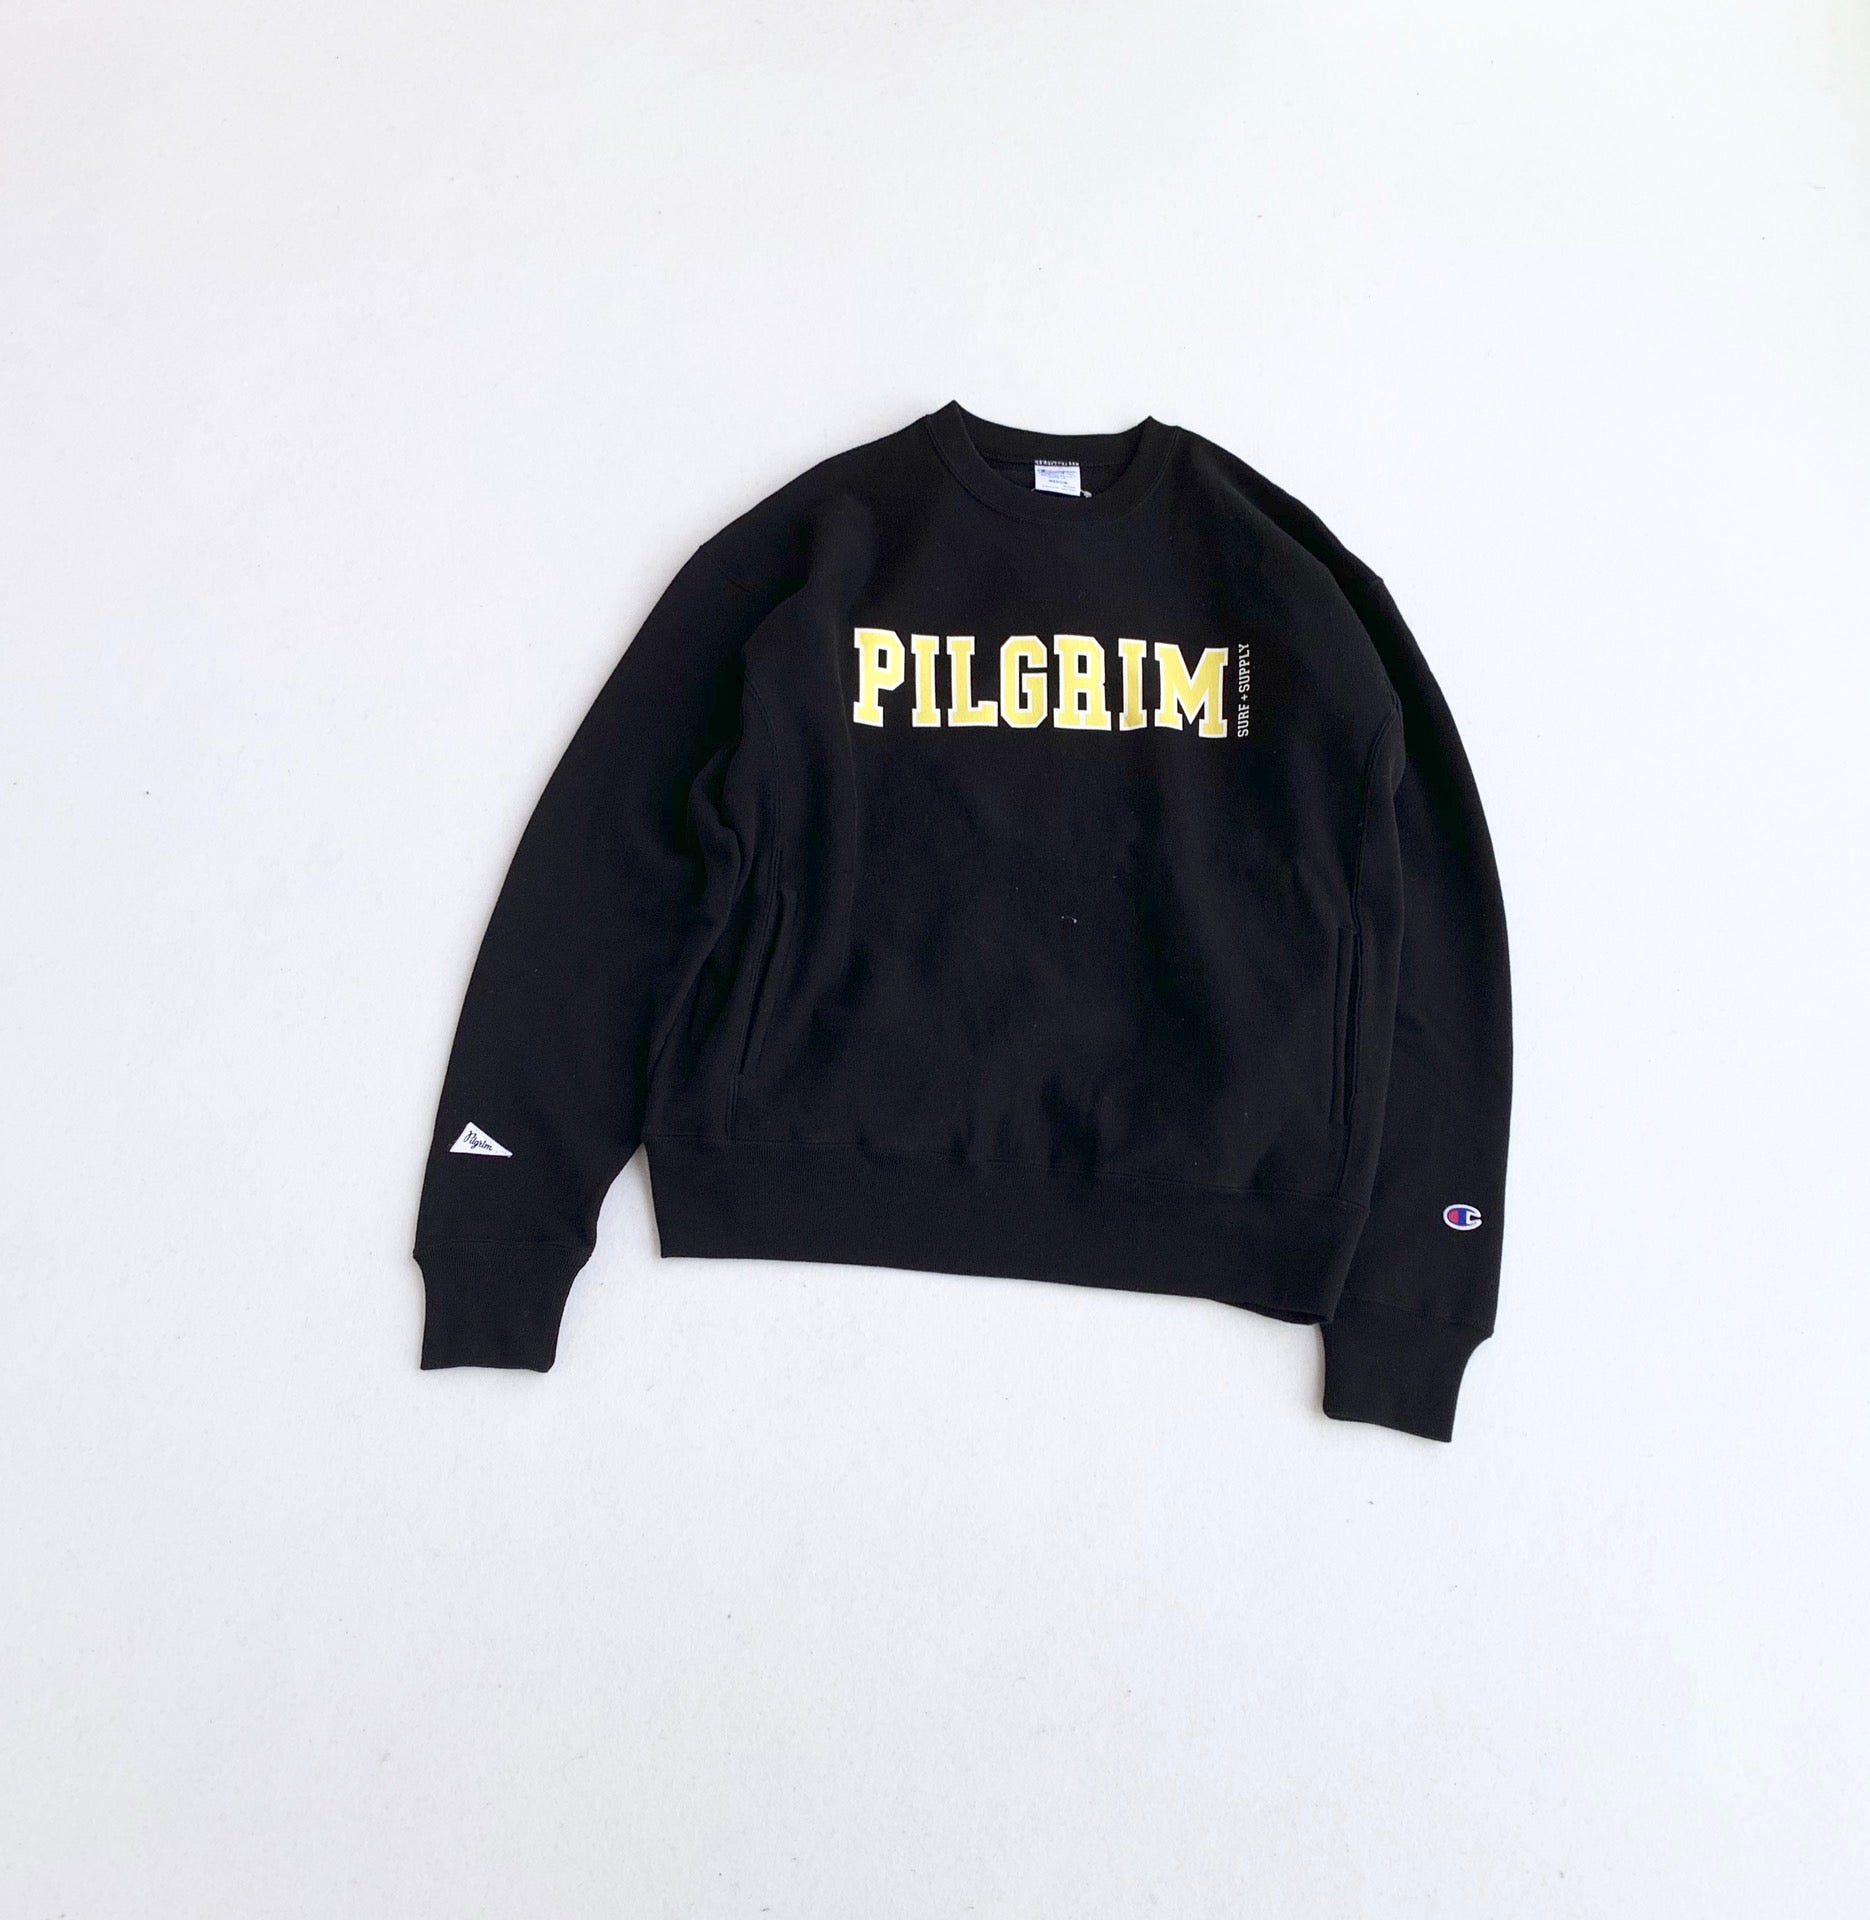 C Pilgrim Sweatshirt - whatever on 